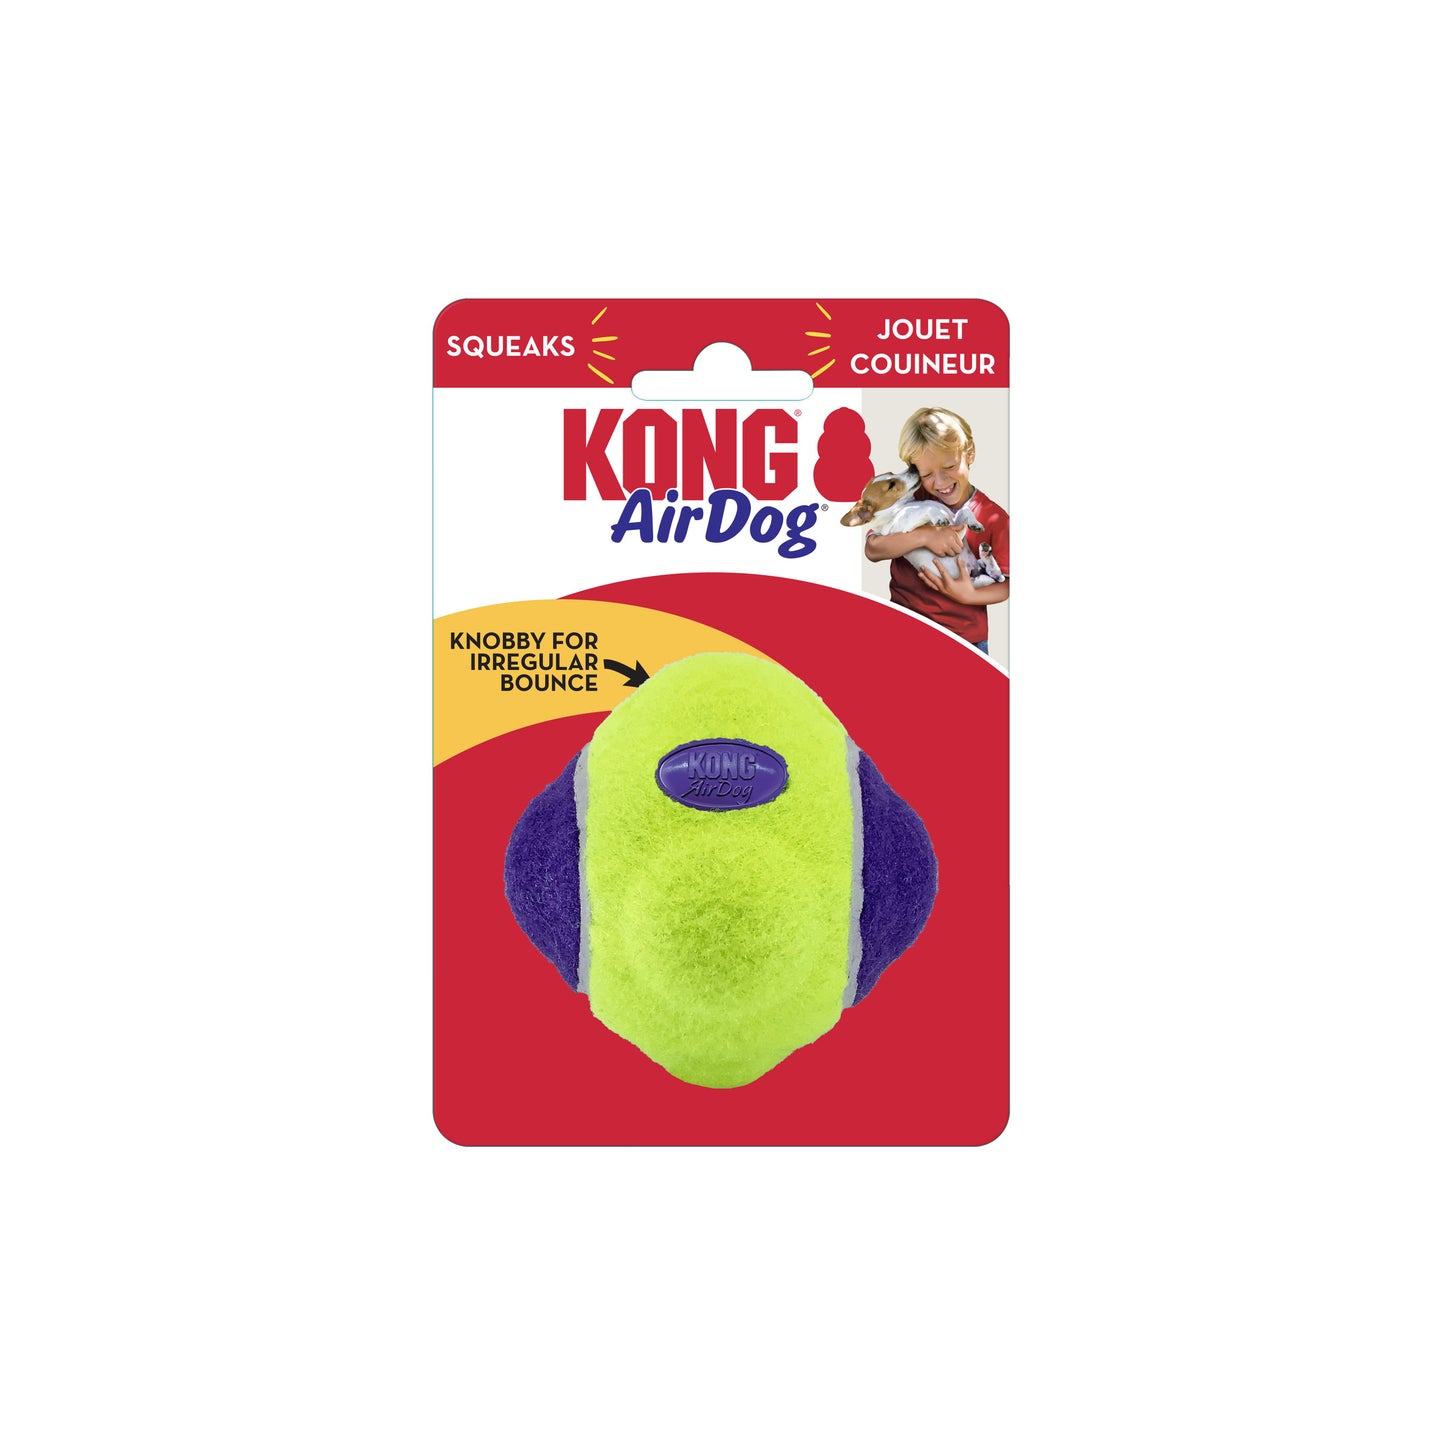 Jouet Kong AirDog 'Knobby Ball'